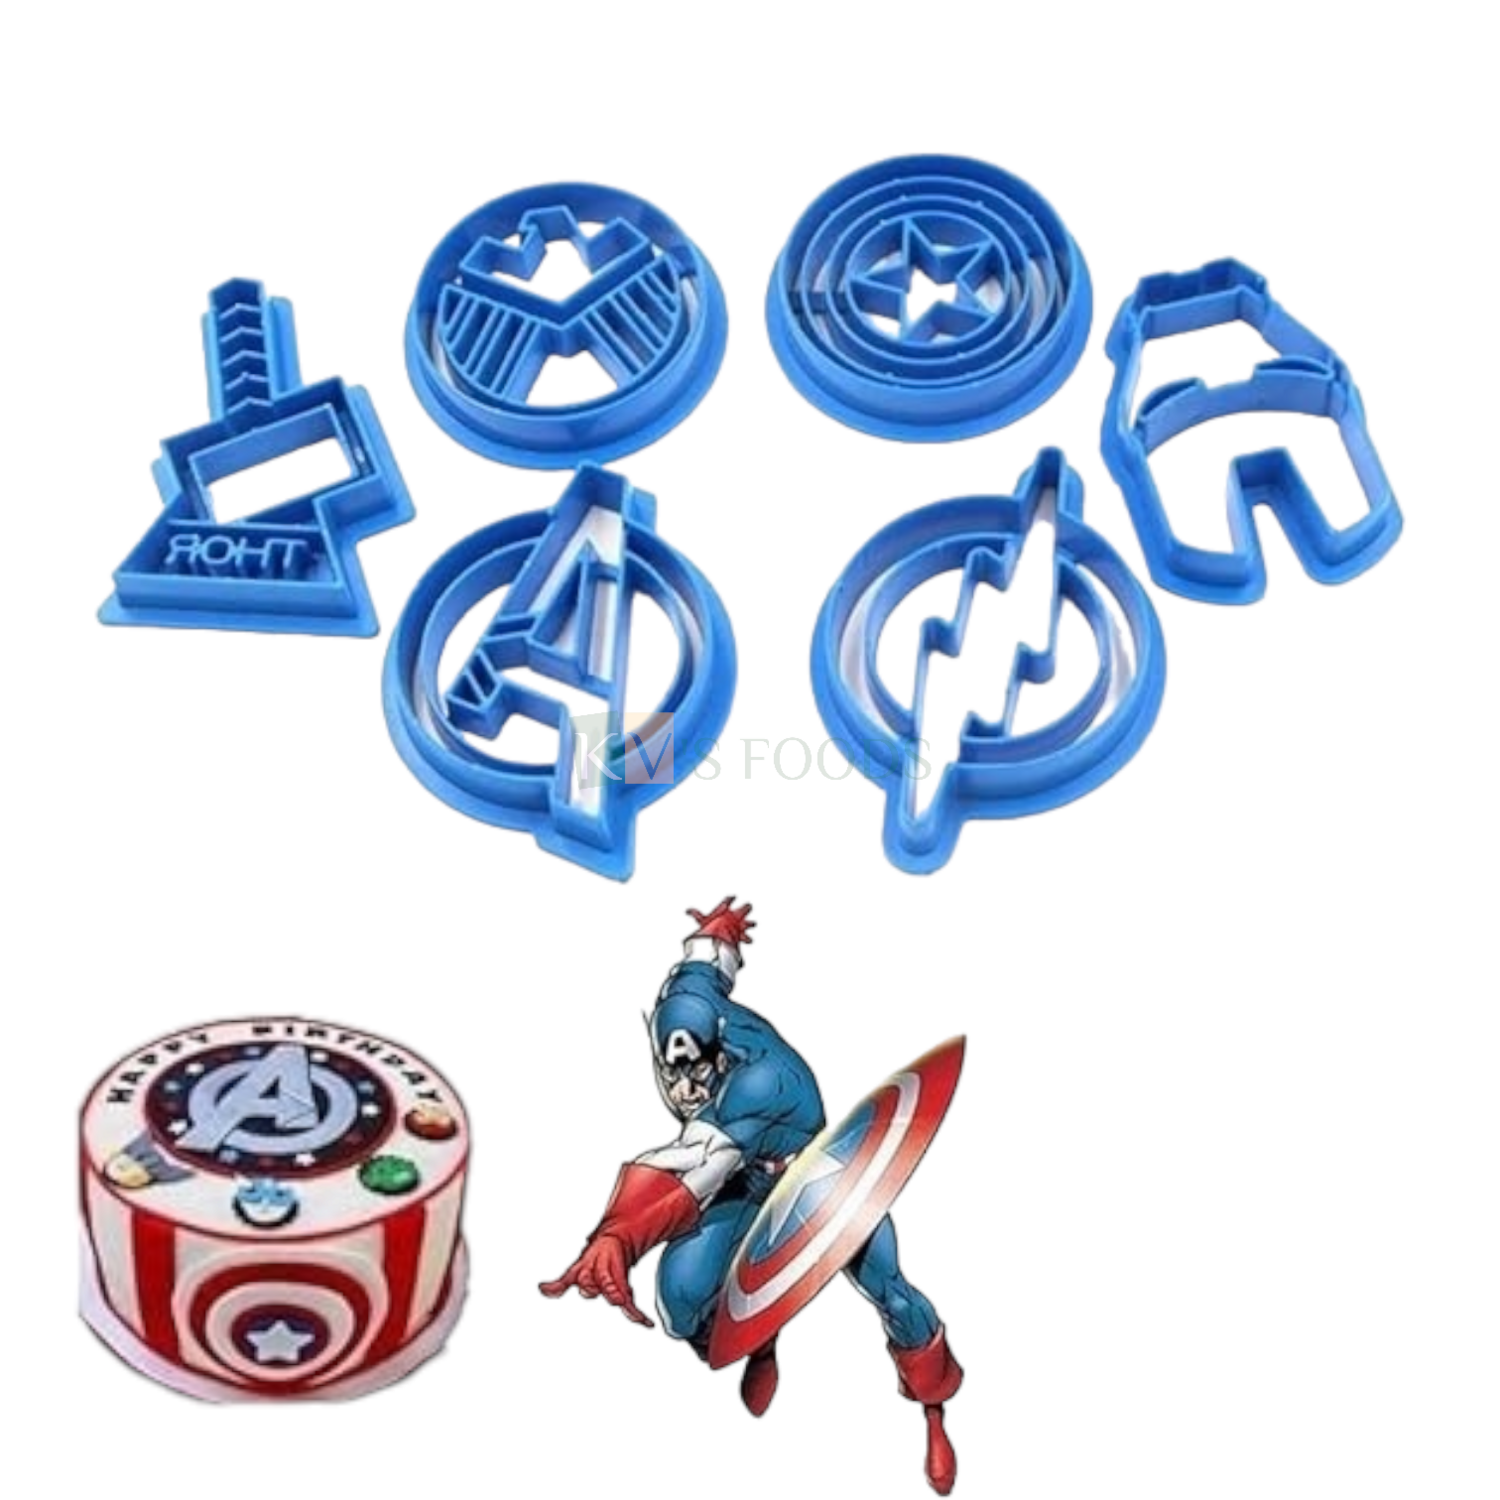 6 PCS Blue Marvel Comics Superheroes Captain America Iron Man Avengers Thor Flash Shield Logos Fondant Cutters Molds Chocolates Pancake Cookies Plungers Boys Mens Birthday Party Cupcake Decorations